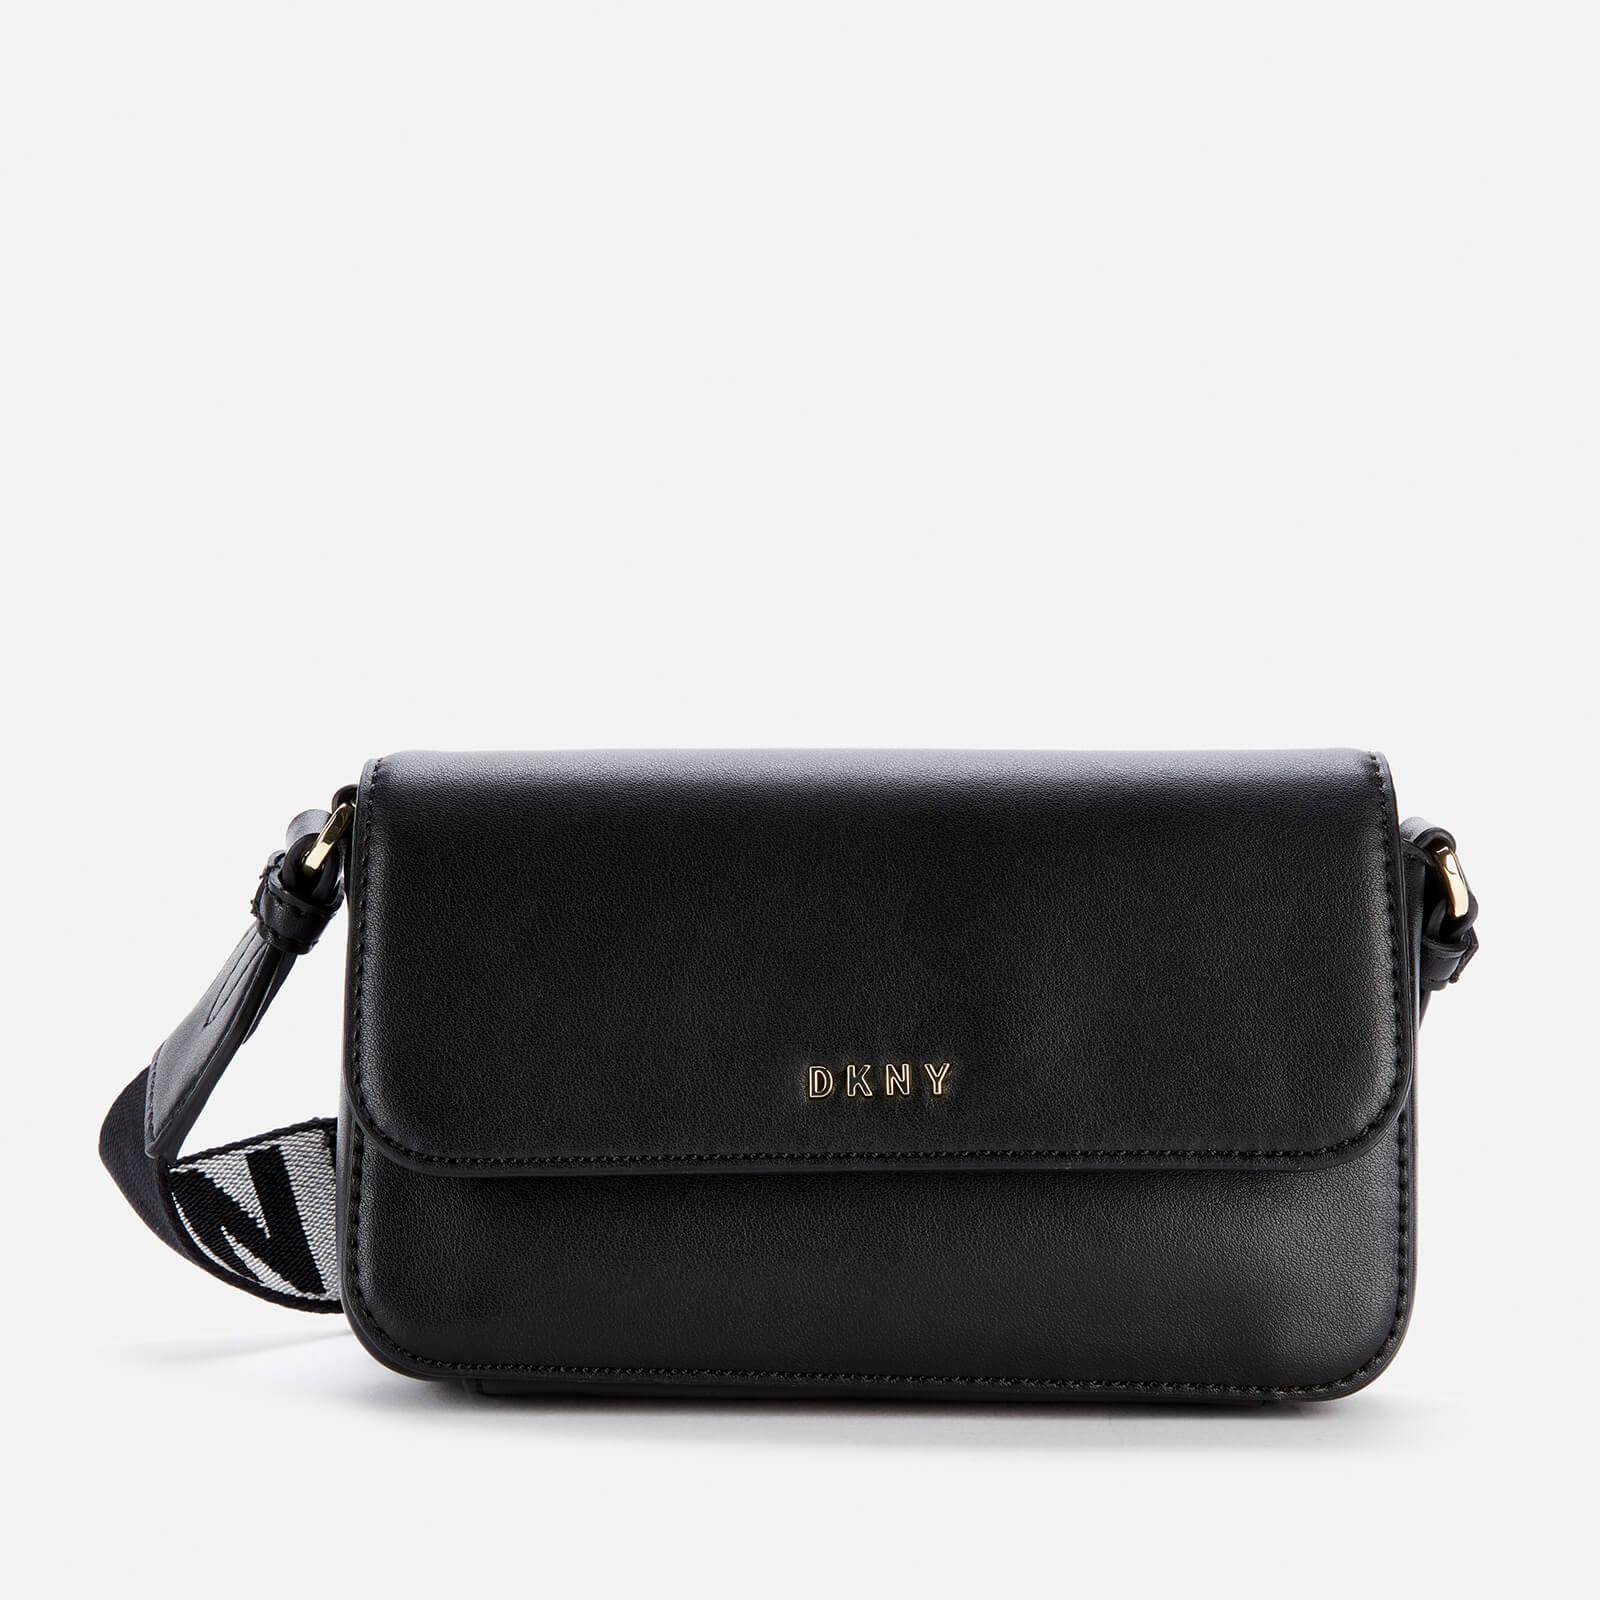 DKNY Winona Flap Cross Body Bag in Black